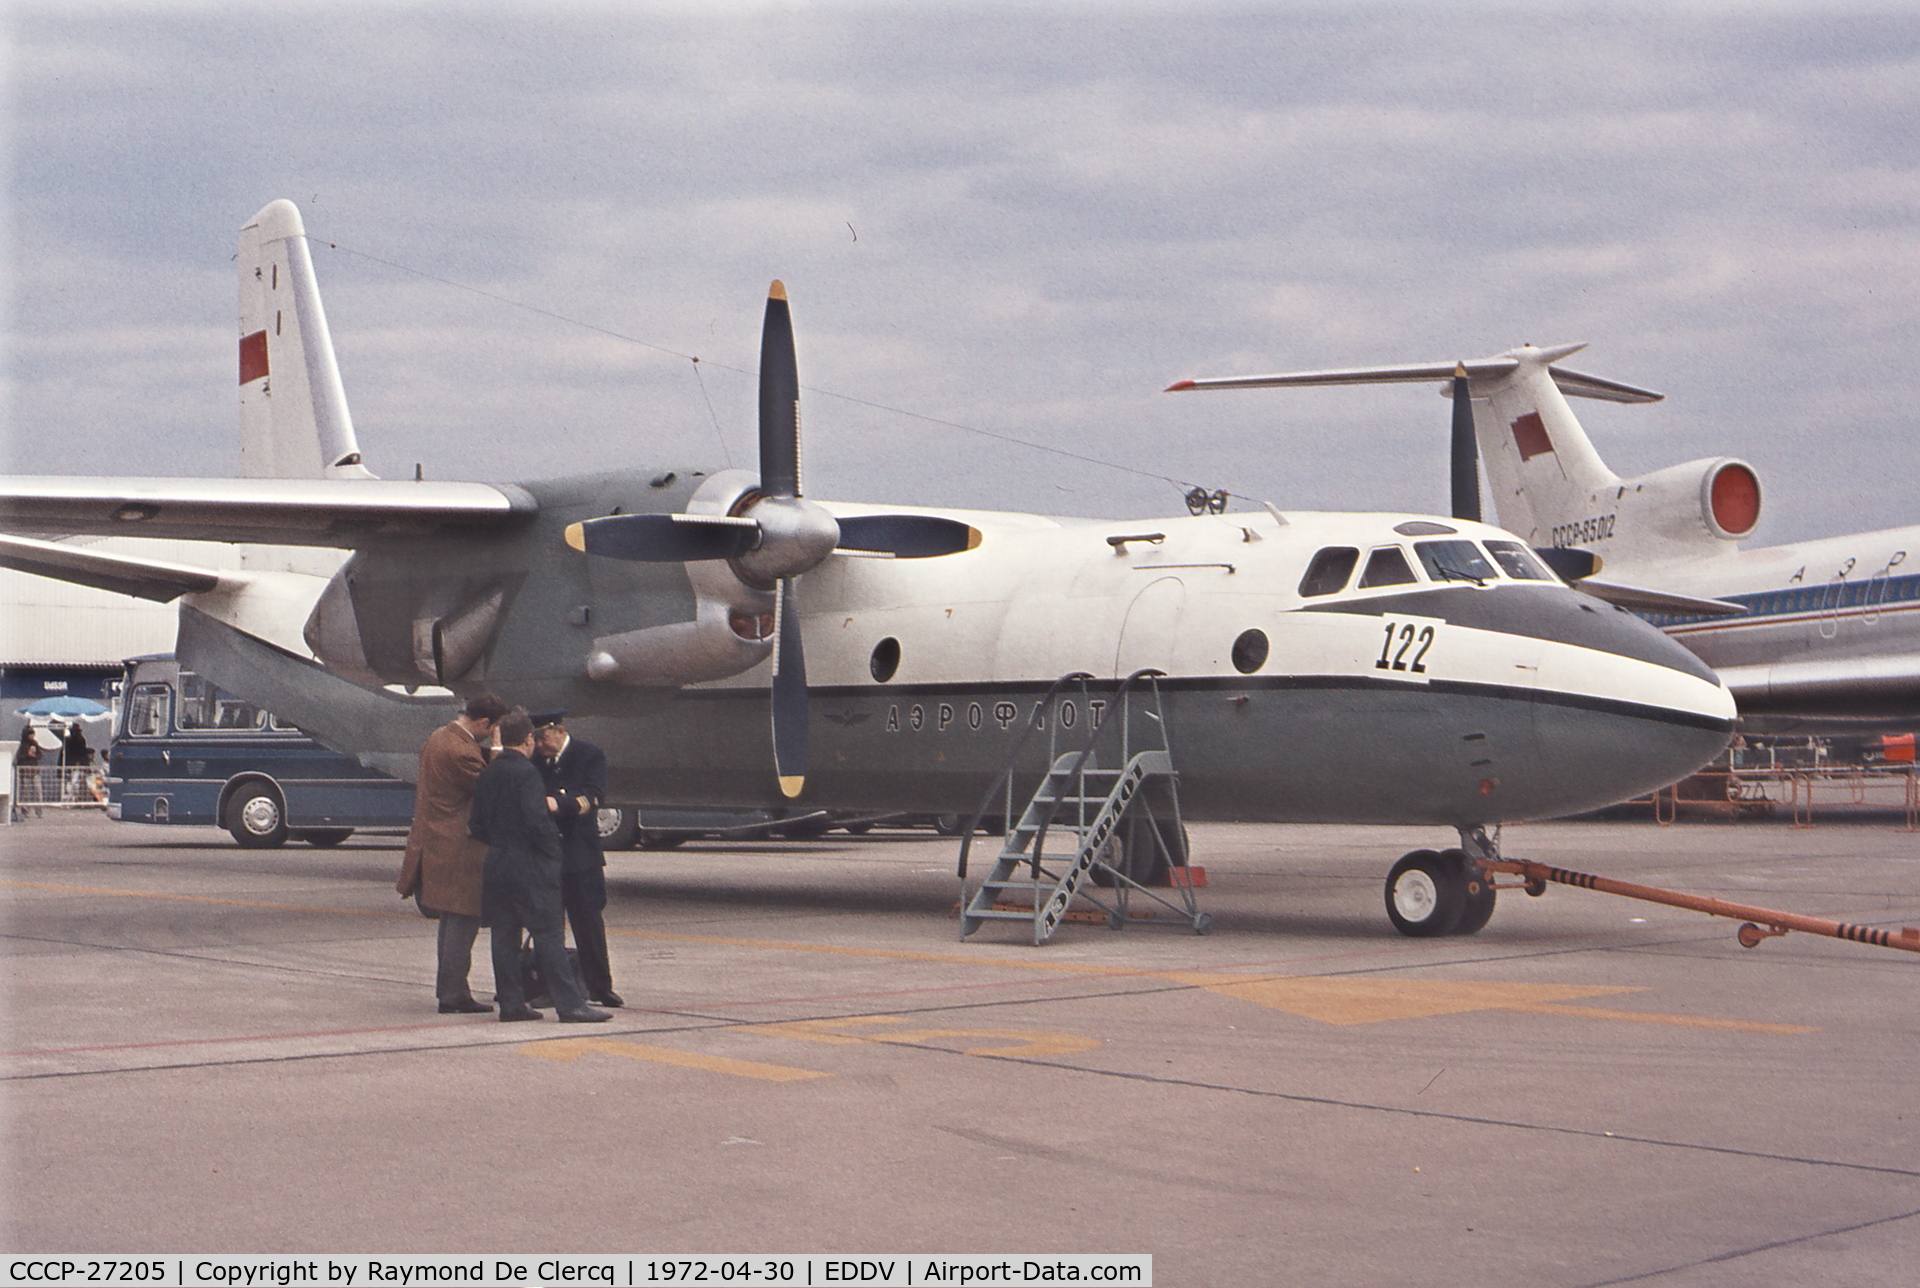 CCCP-27205, Antonov An-24 C/N Not found CCCP-27205, Hannover Messe 1972